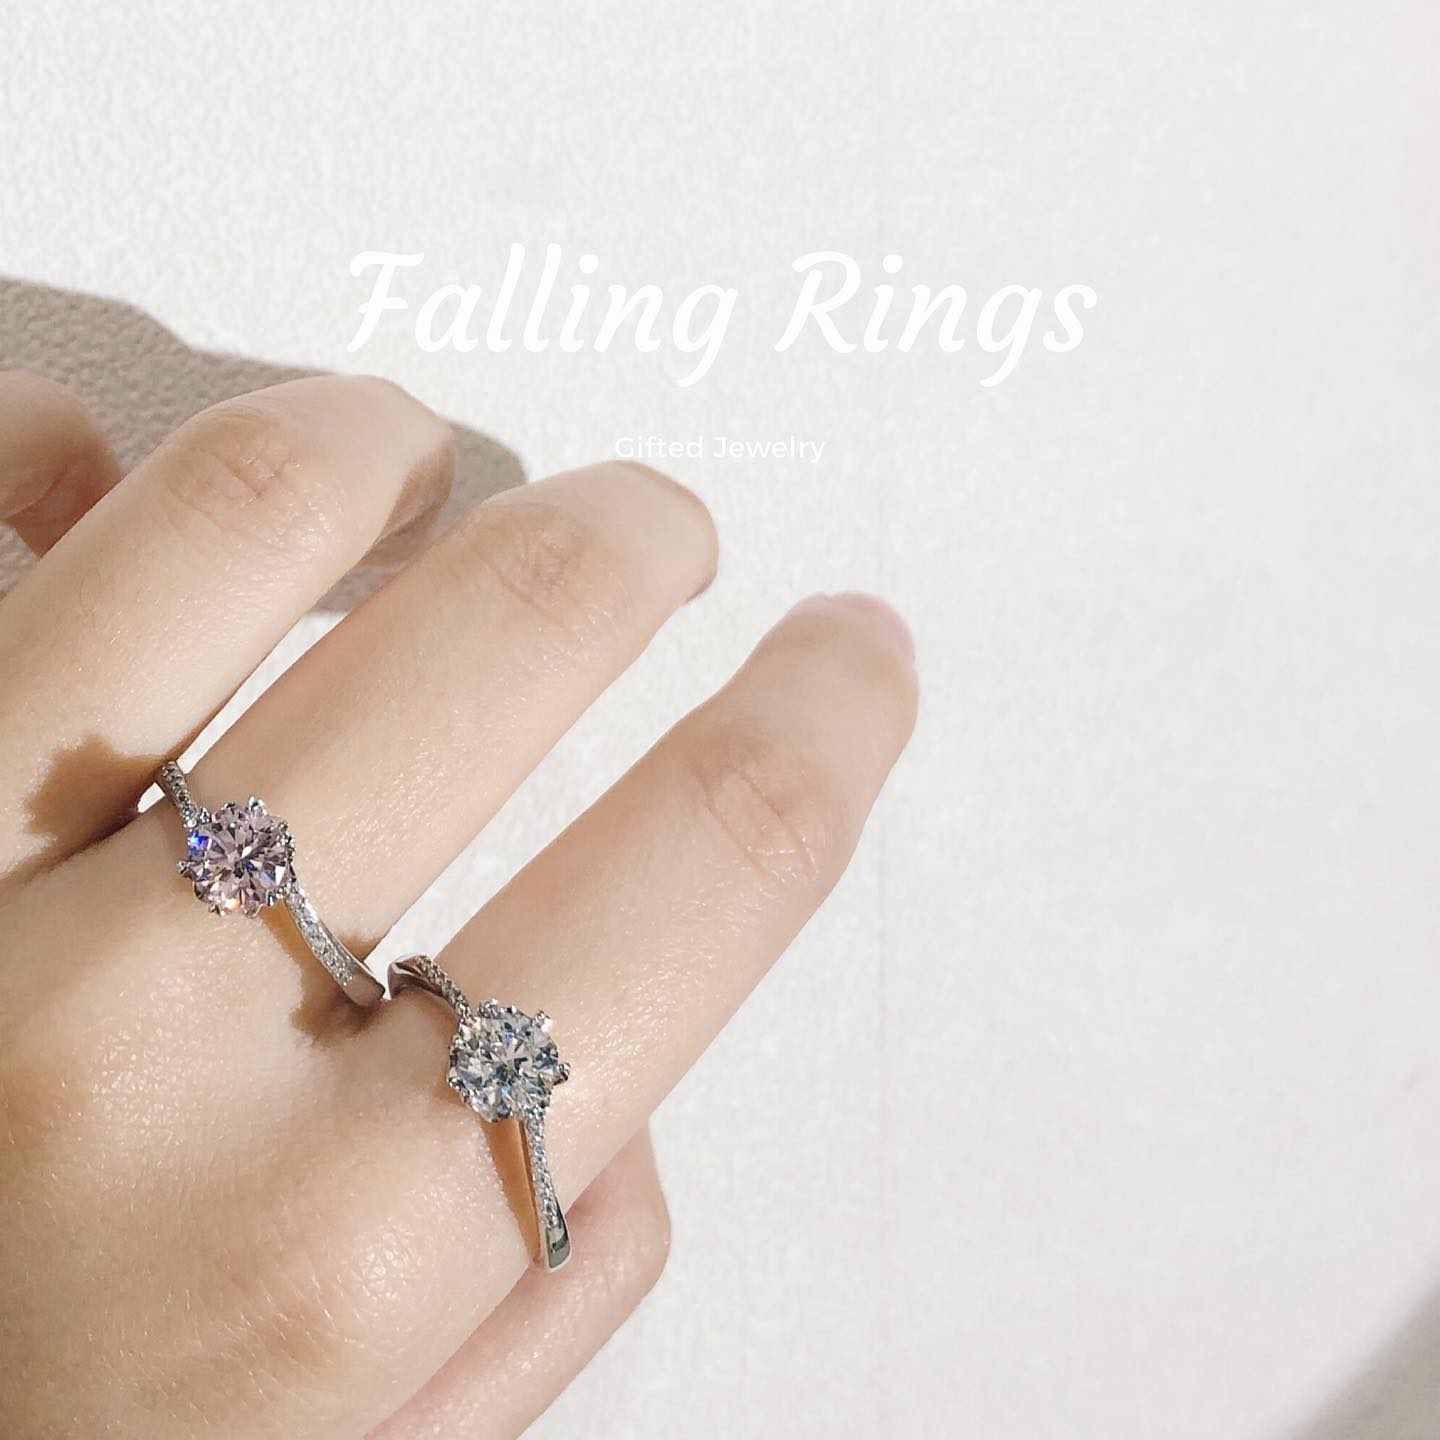 Falling Ring 墜入愛河